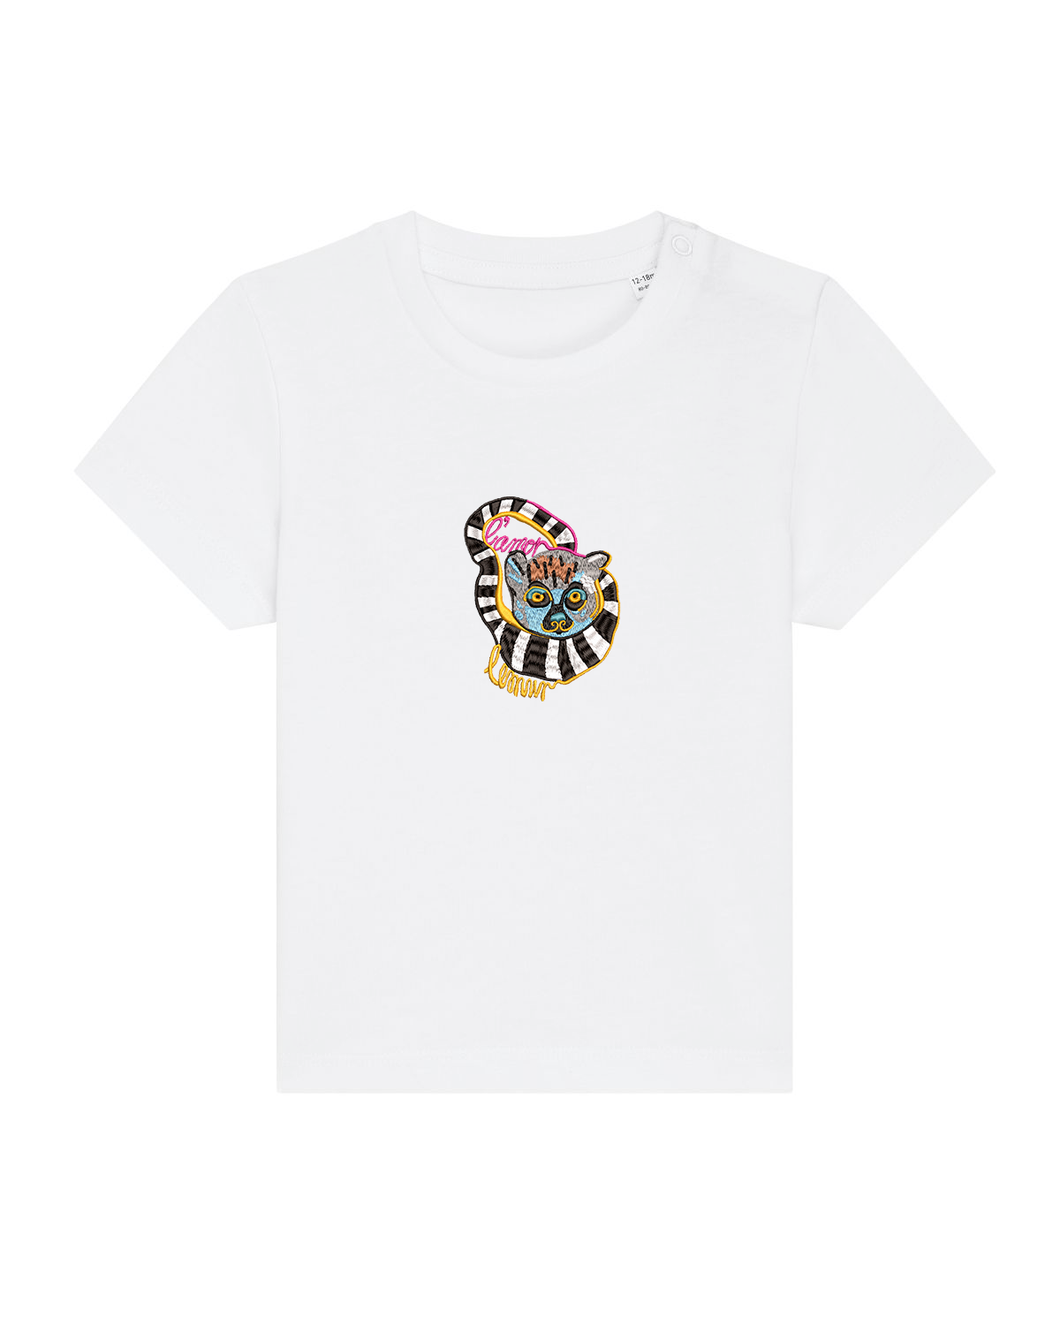 🤍Lemur L'amor🤍 -  Embroidered baby tshirt